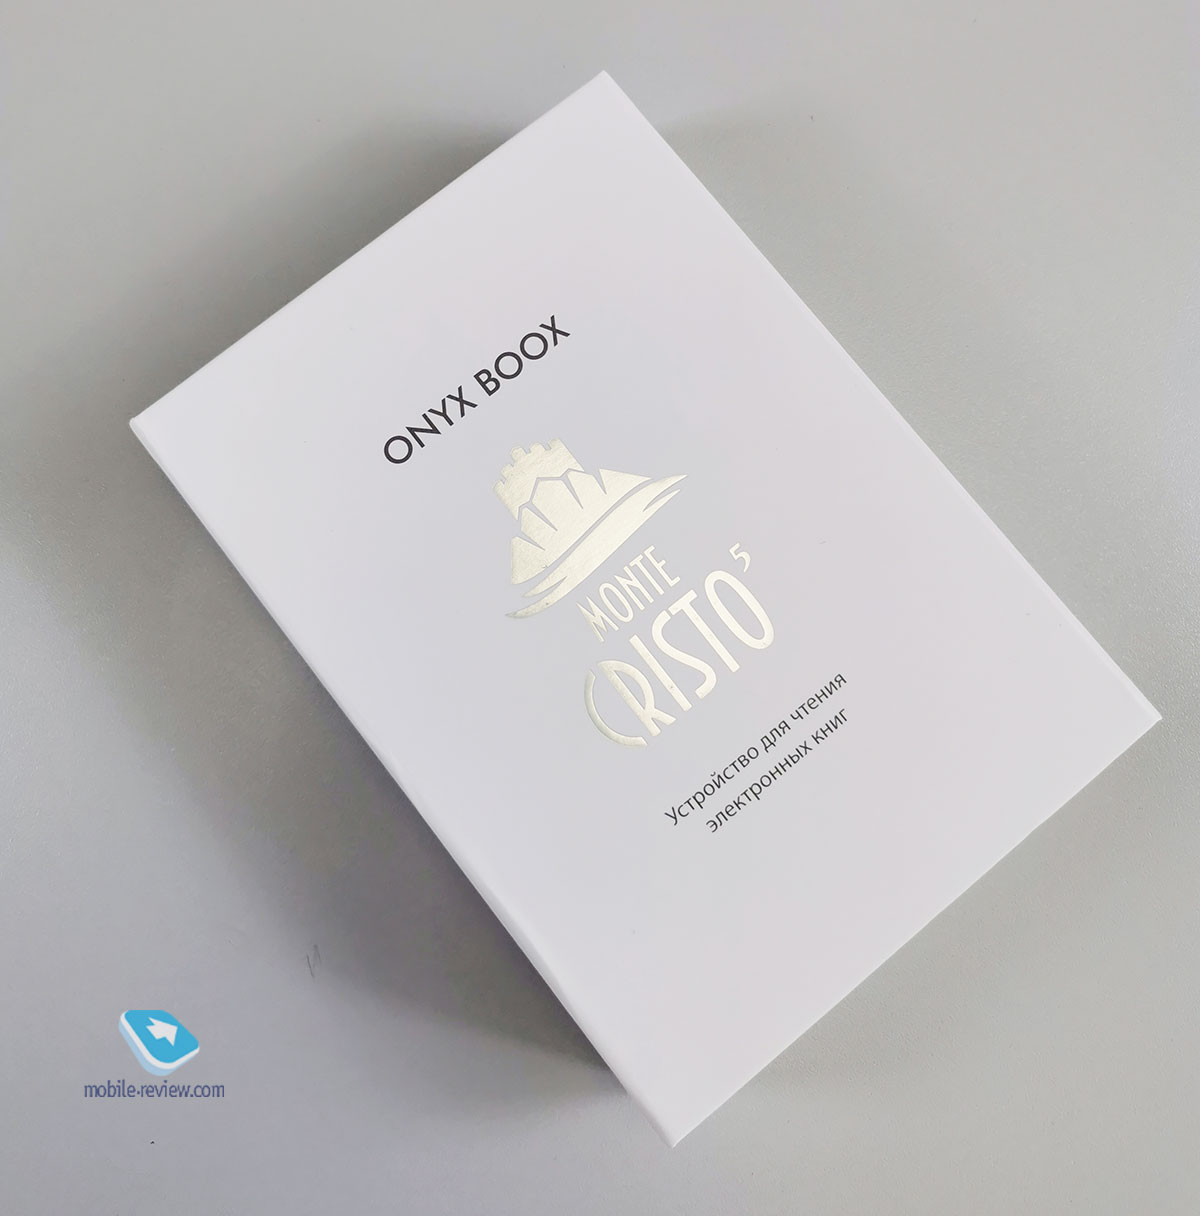 Обзор электронной книги Onyx Boox Monte Cristo 5